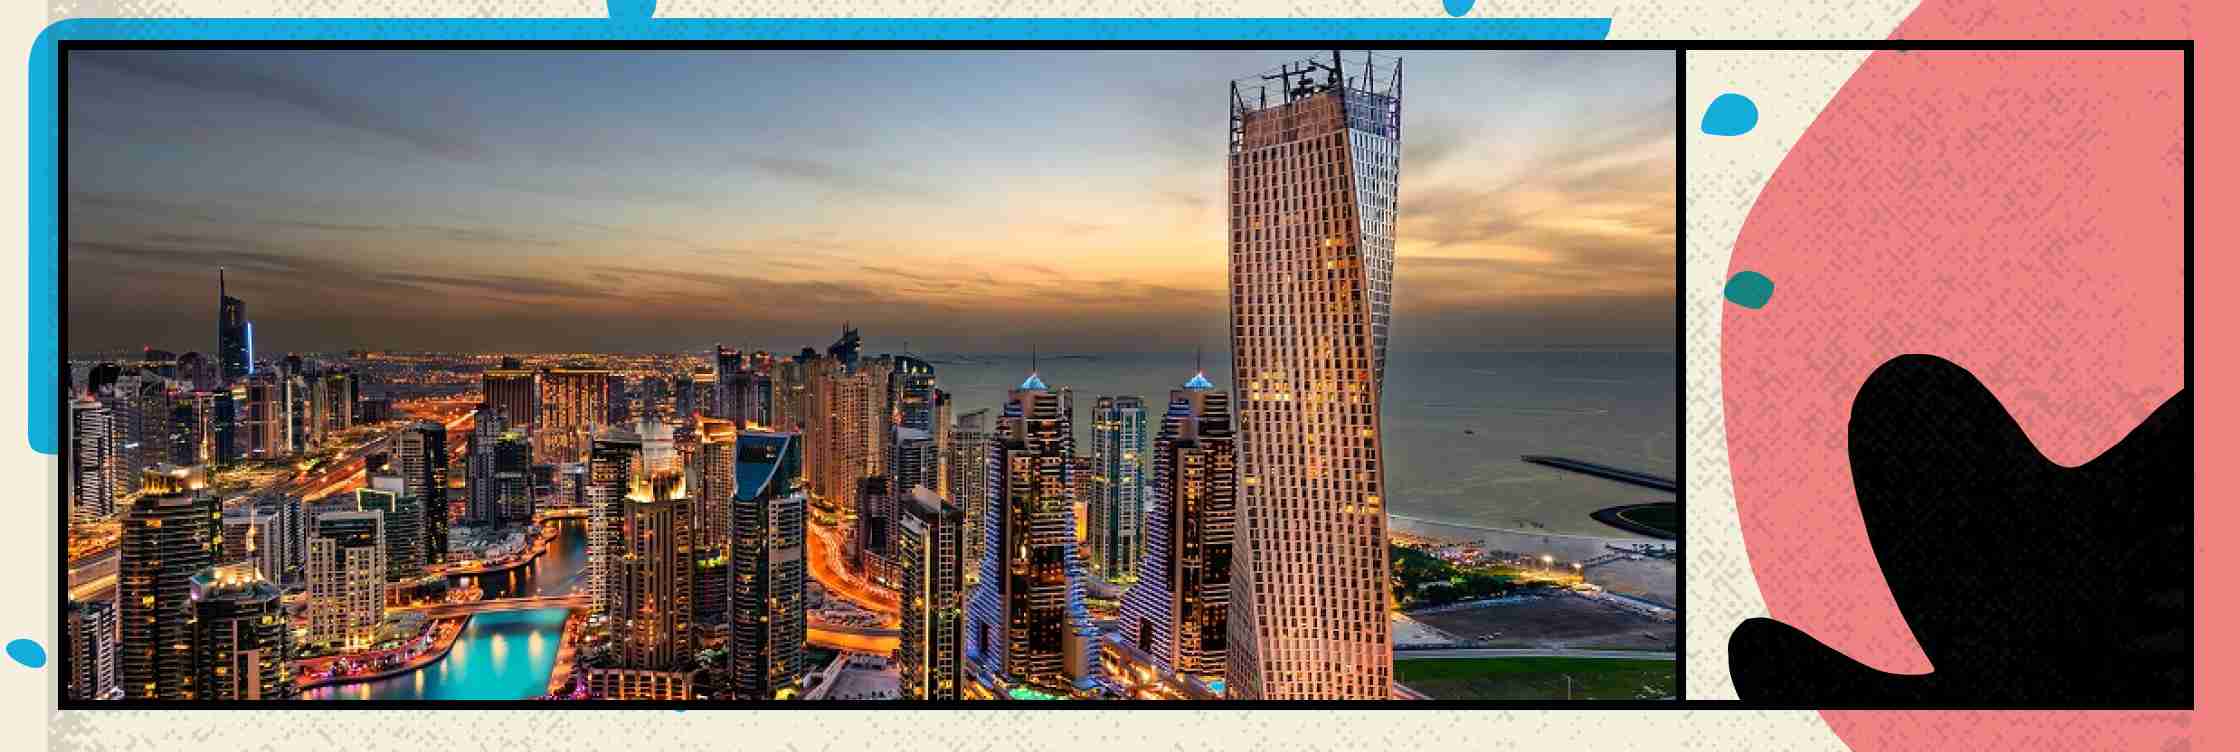 Dubai Develops the Digital Economy Sector